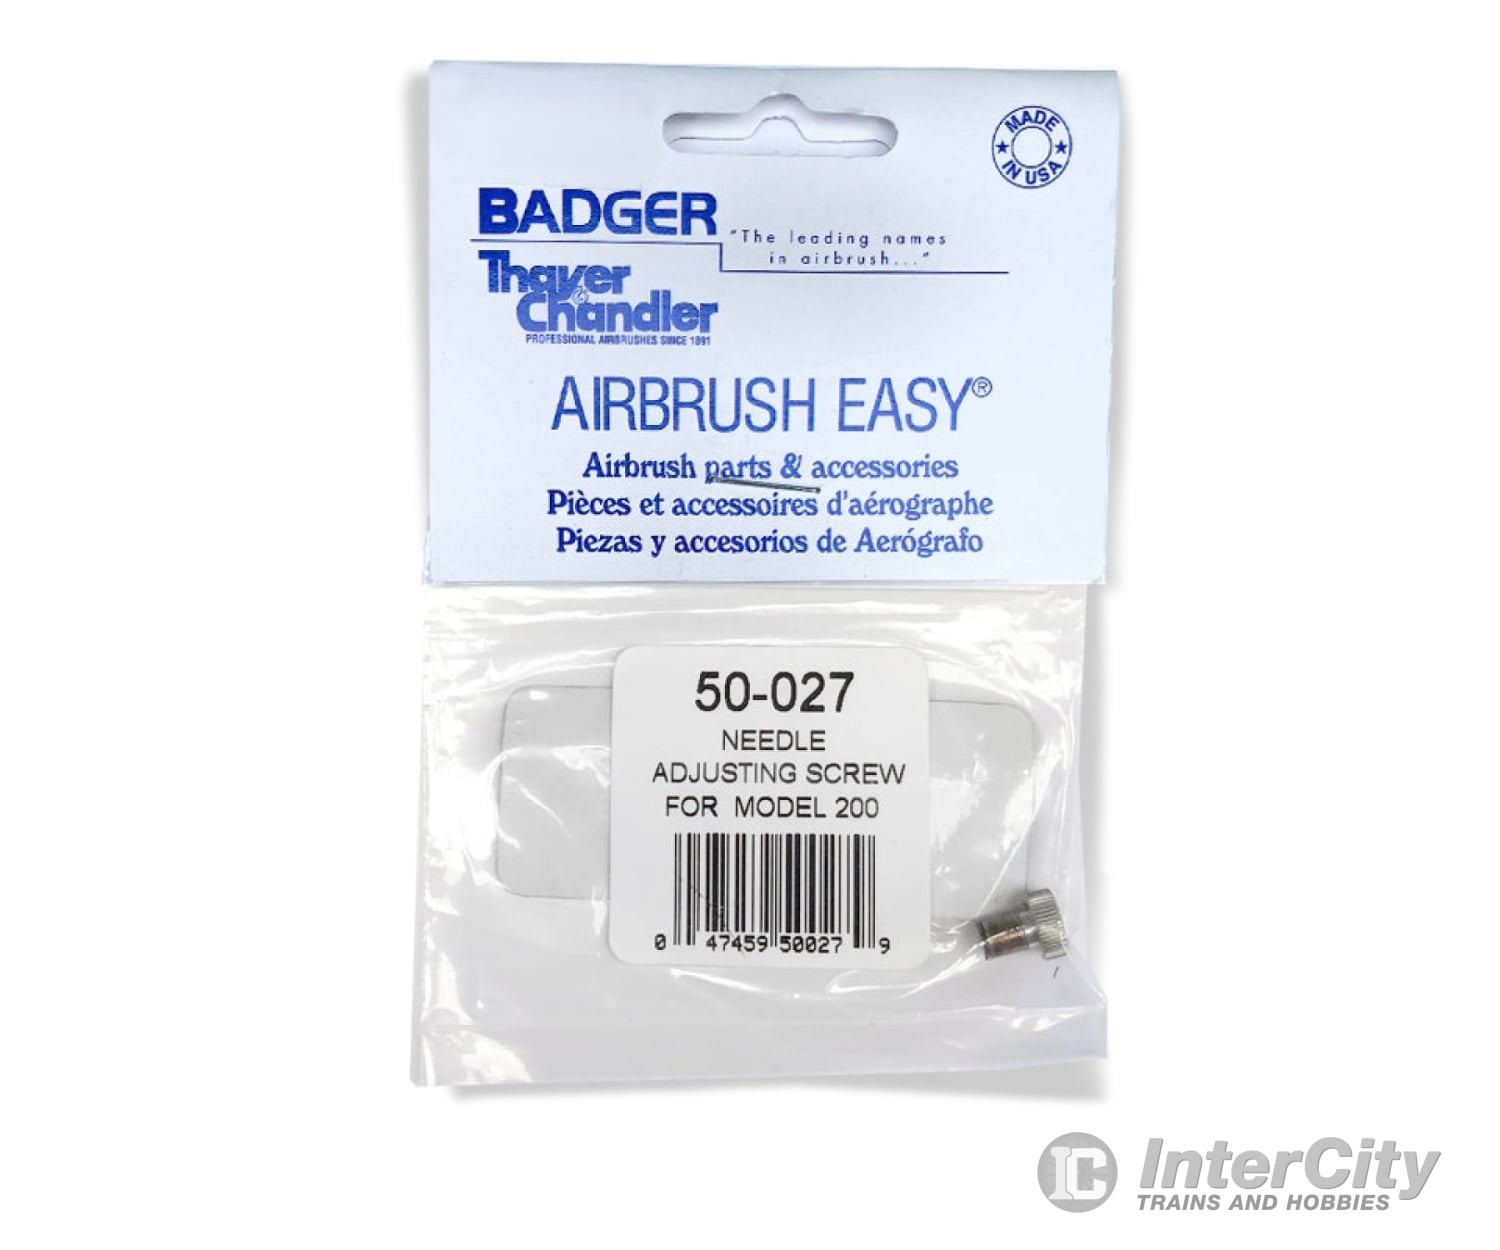 Badger Air-Brush Company